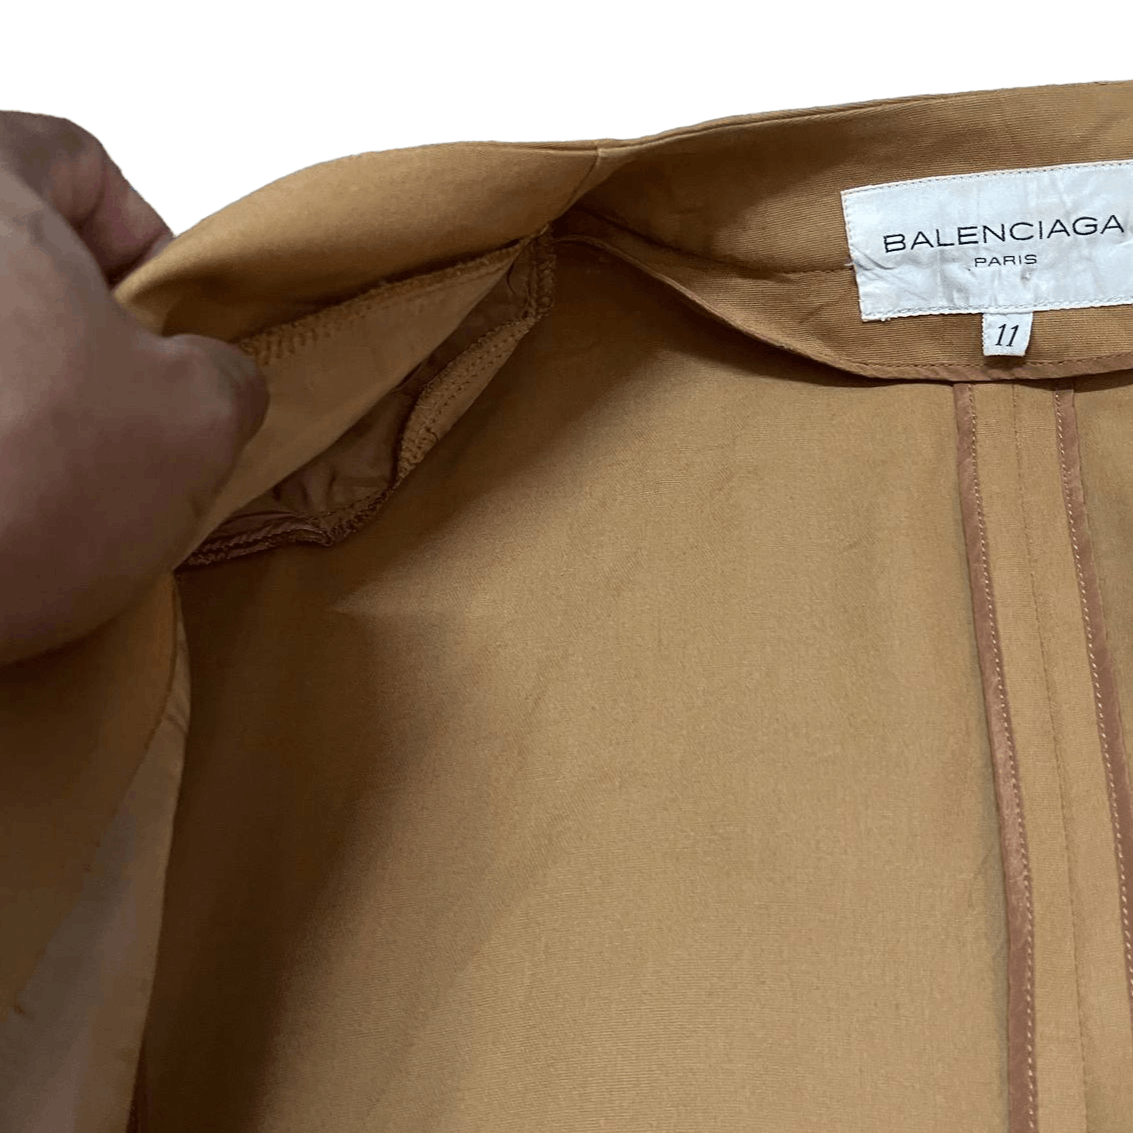 Balenciaga Paris Short Sleeve Jacket - 10